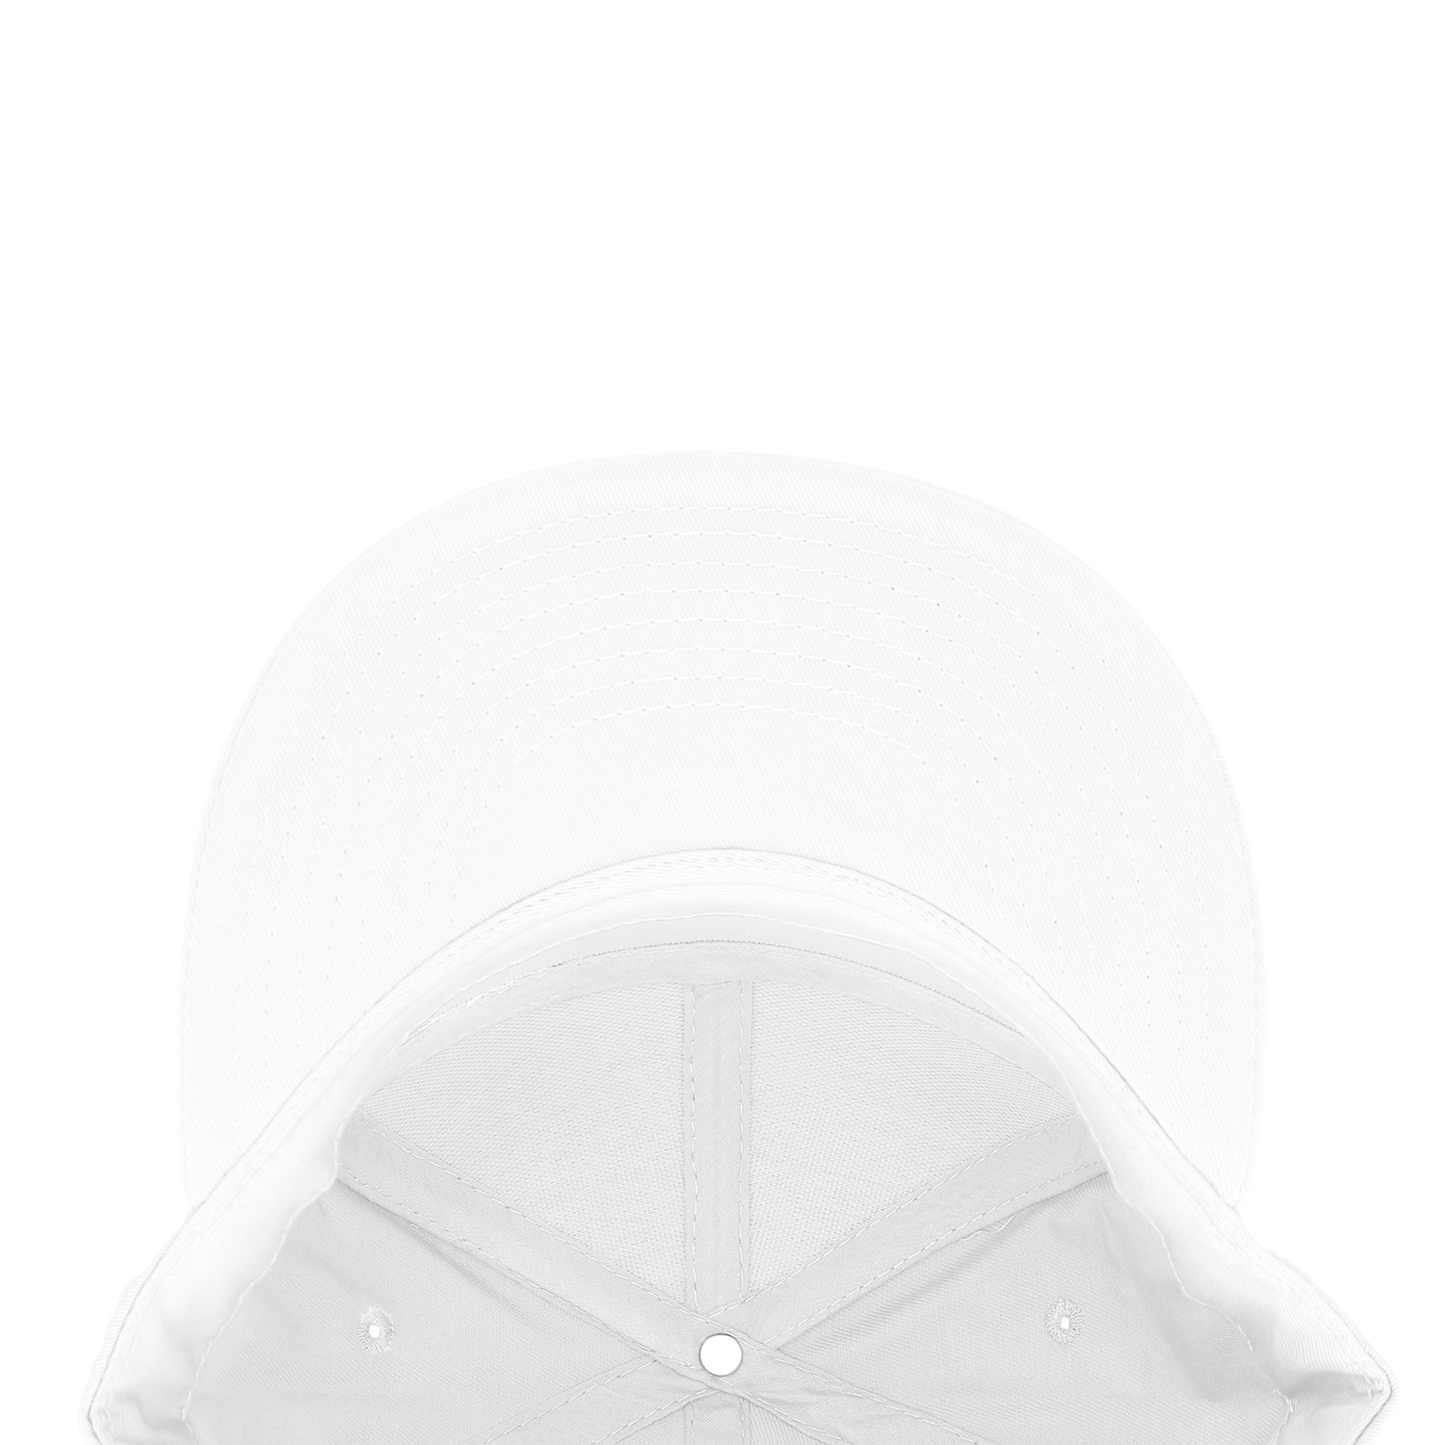 Custom Patch Decky 1098 - 7 Panel Flat Bill Hat, Snapback, 7 Panel High Profile Structured Cap